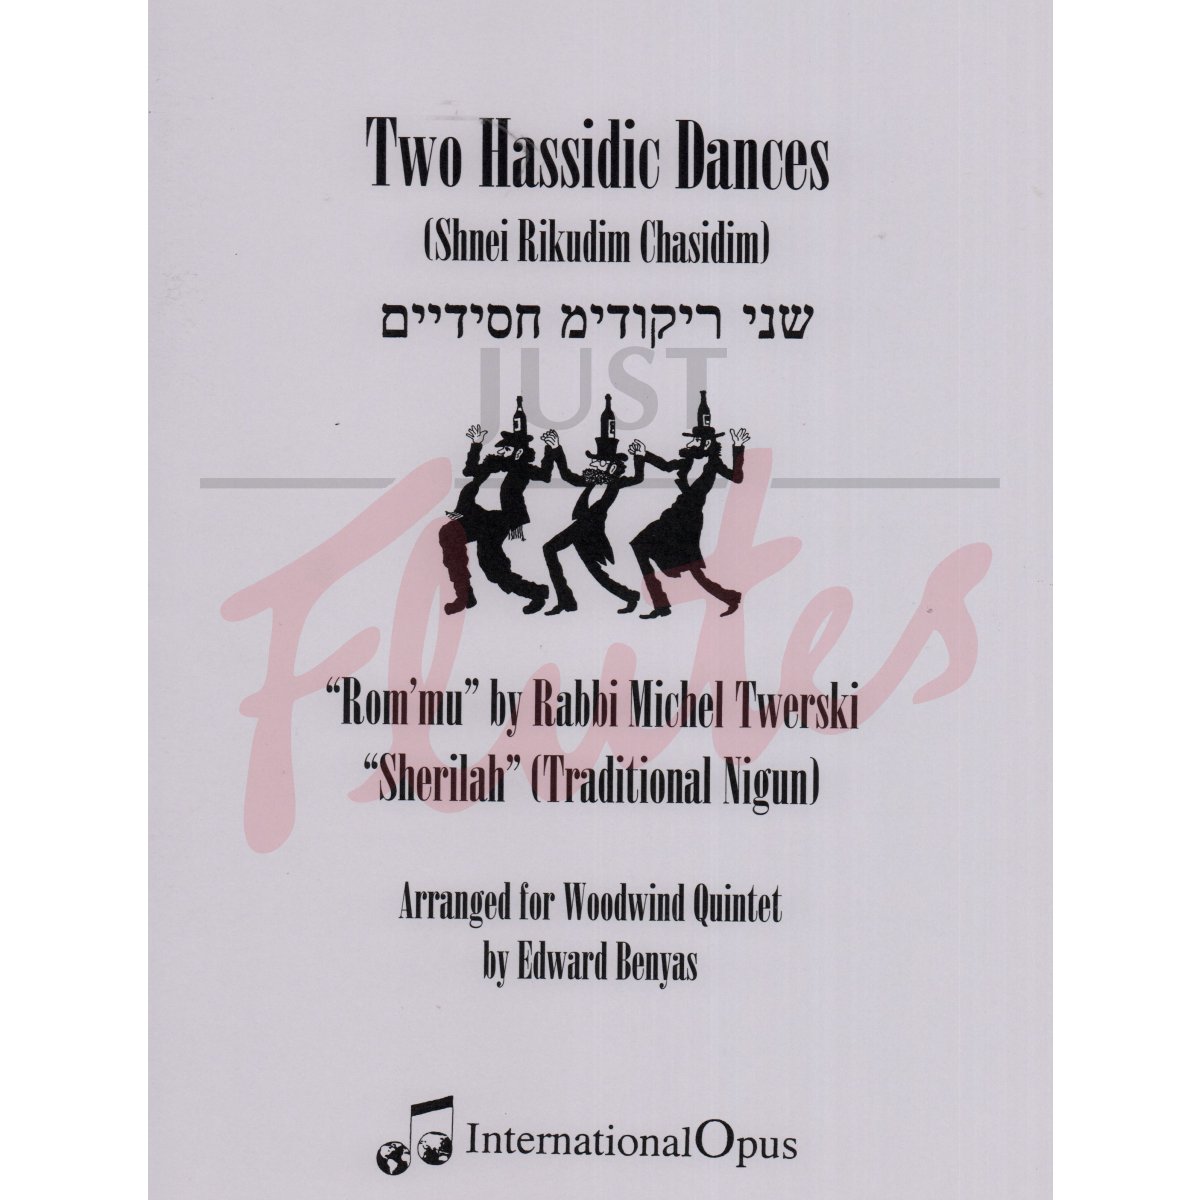 Two Hassidic Dances for Wind Quintet